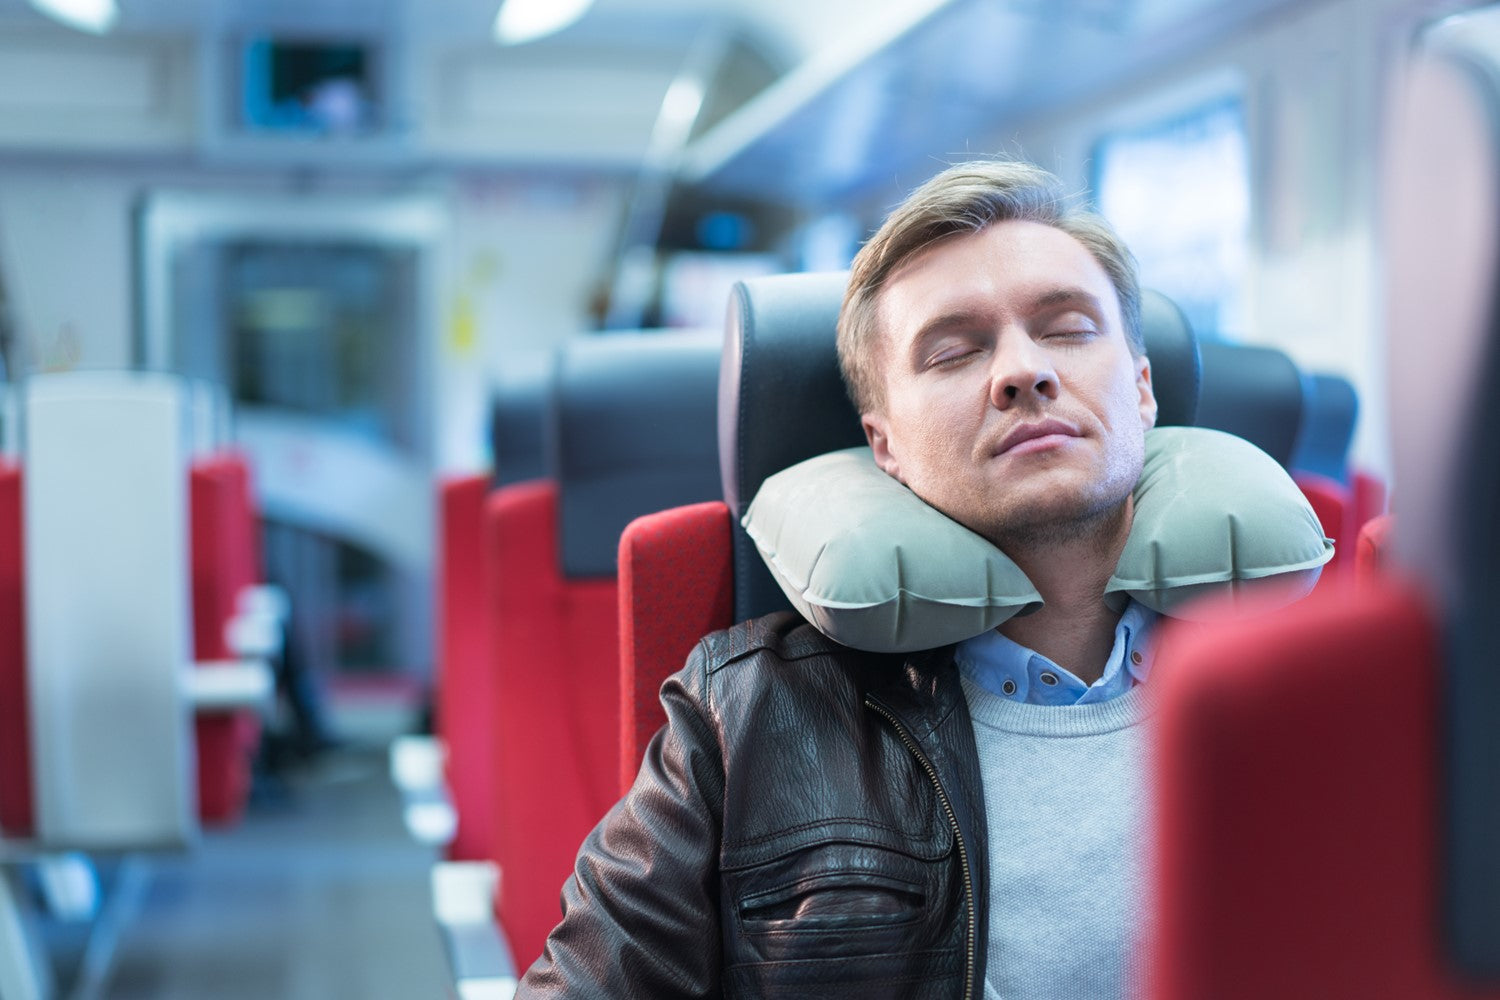 Temperature-Regulating Airplane Pillows : airplane pillow